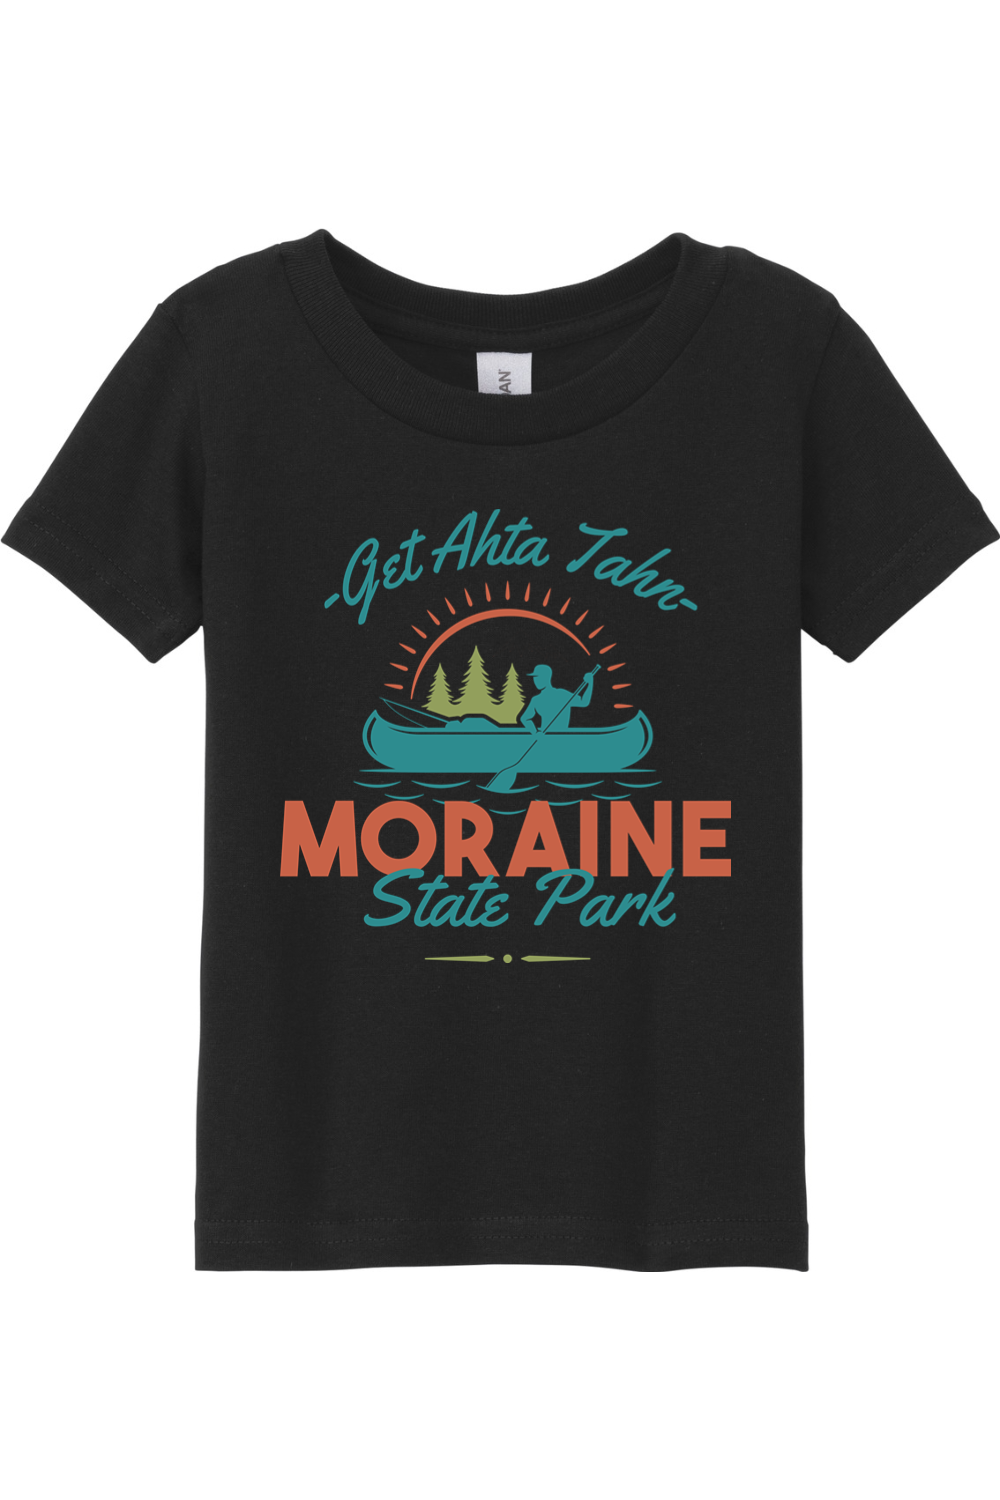 Moraine State Park - Get Ahta Tahn - Toddler T-Shirt - Yinzylvania